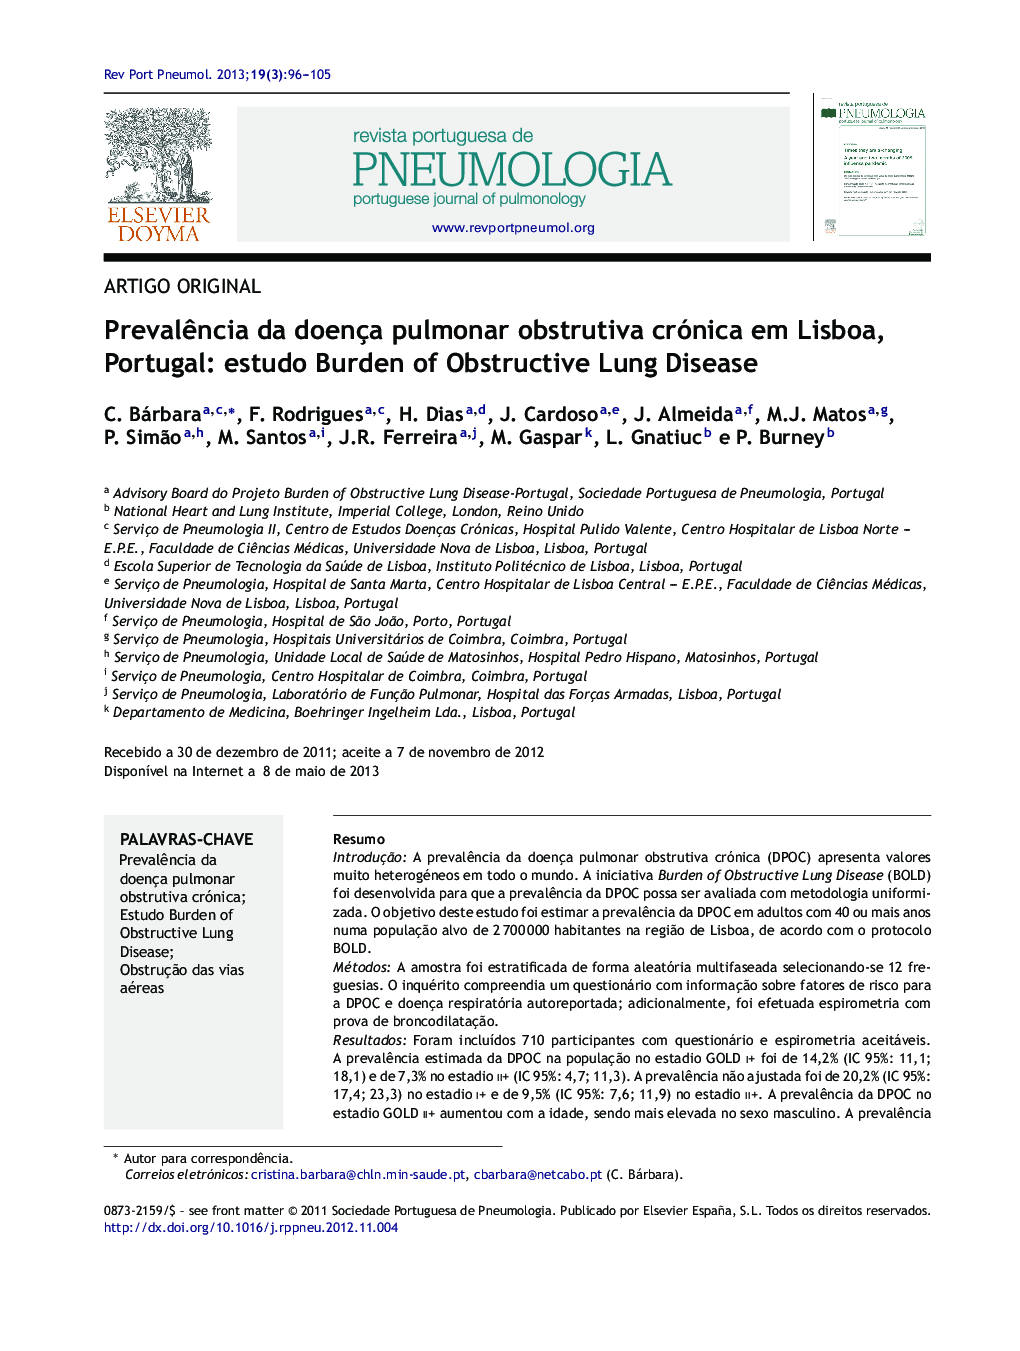 Prevalência da doença pulmonar obstrutiva crónica em Lisboa, Portugal: estudo Burden of Obstructive Lung Disease